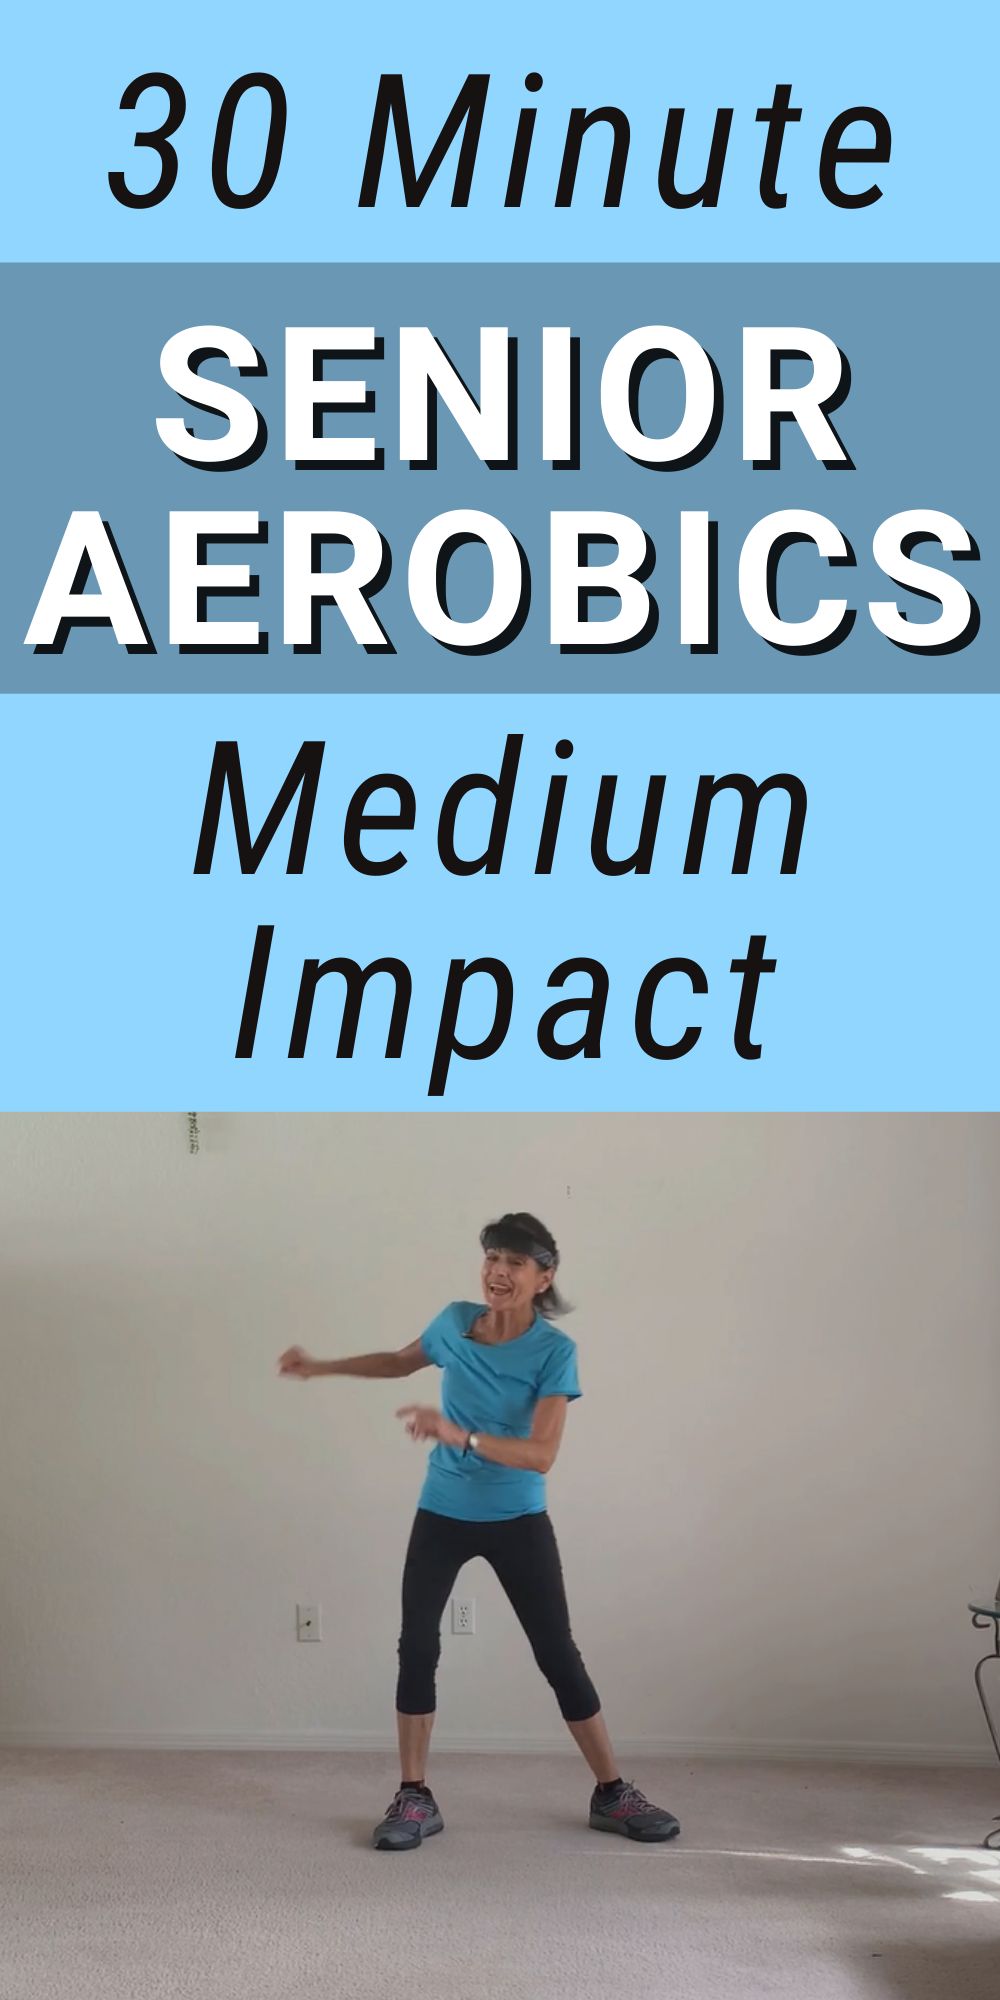 Aerobics Video - Medium Impact - Fitness With Cindy